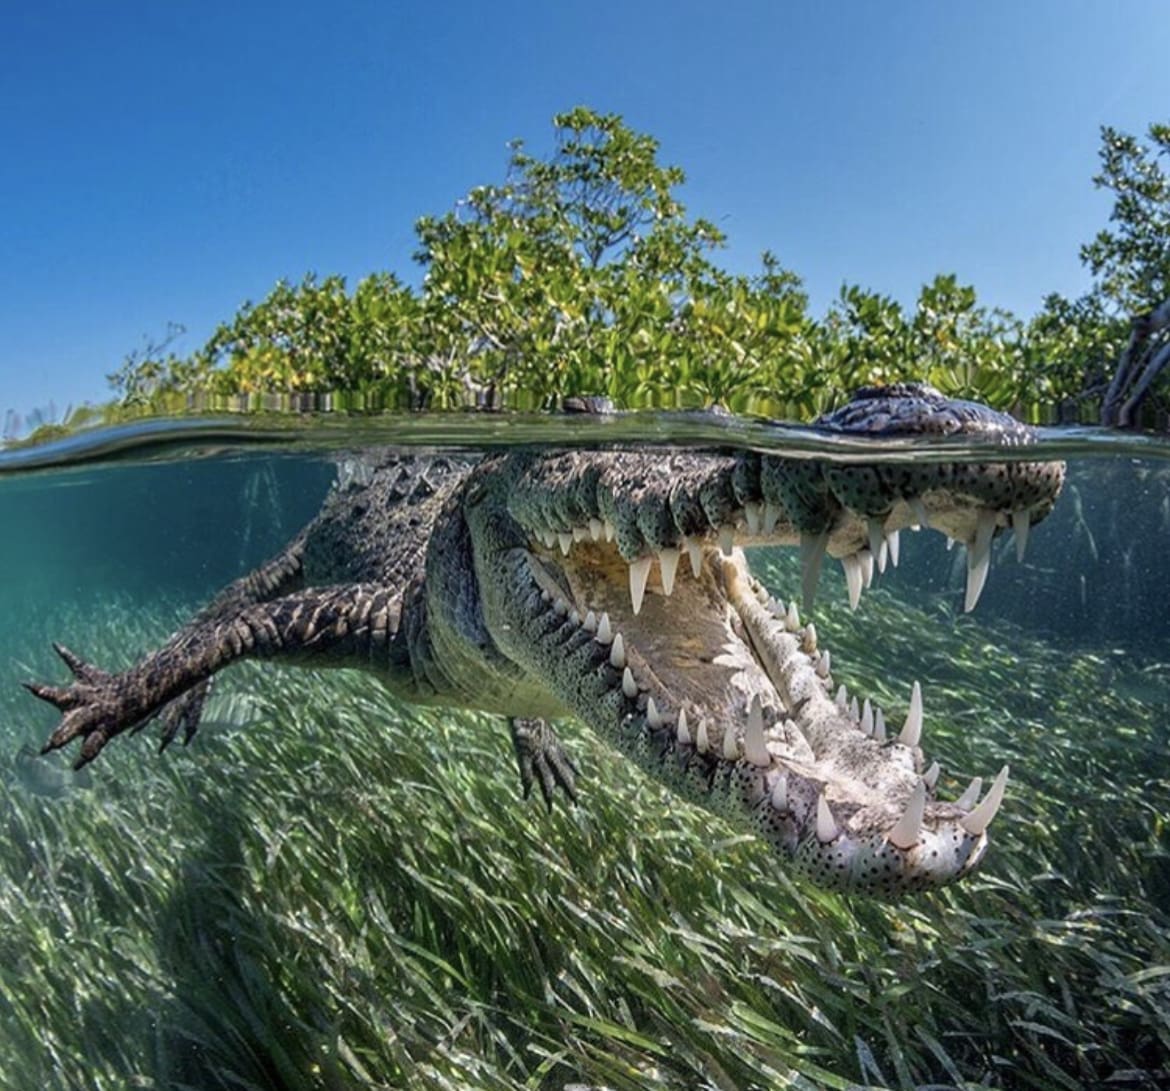 Saltwater crocodile - the most iconic animals in australia